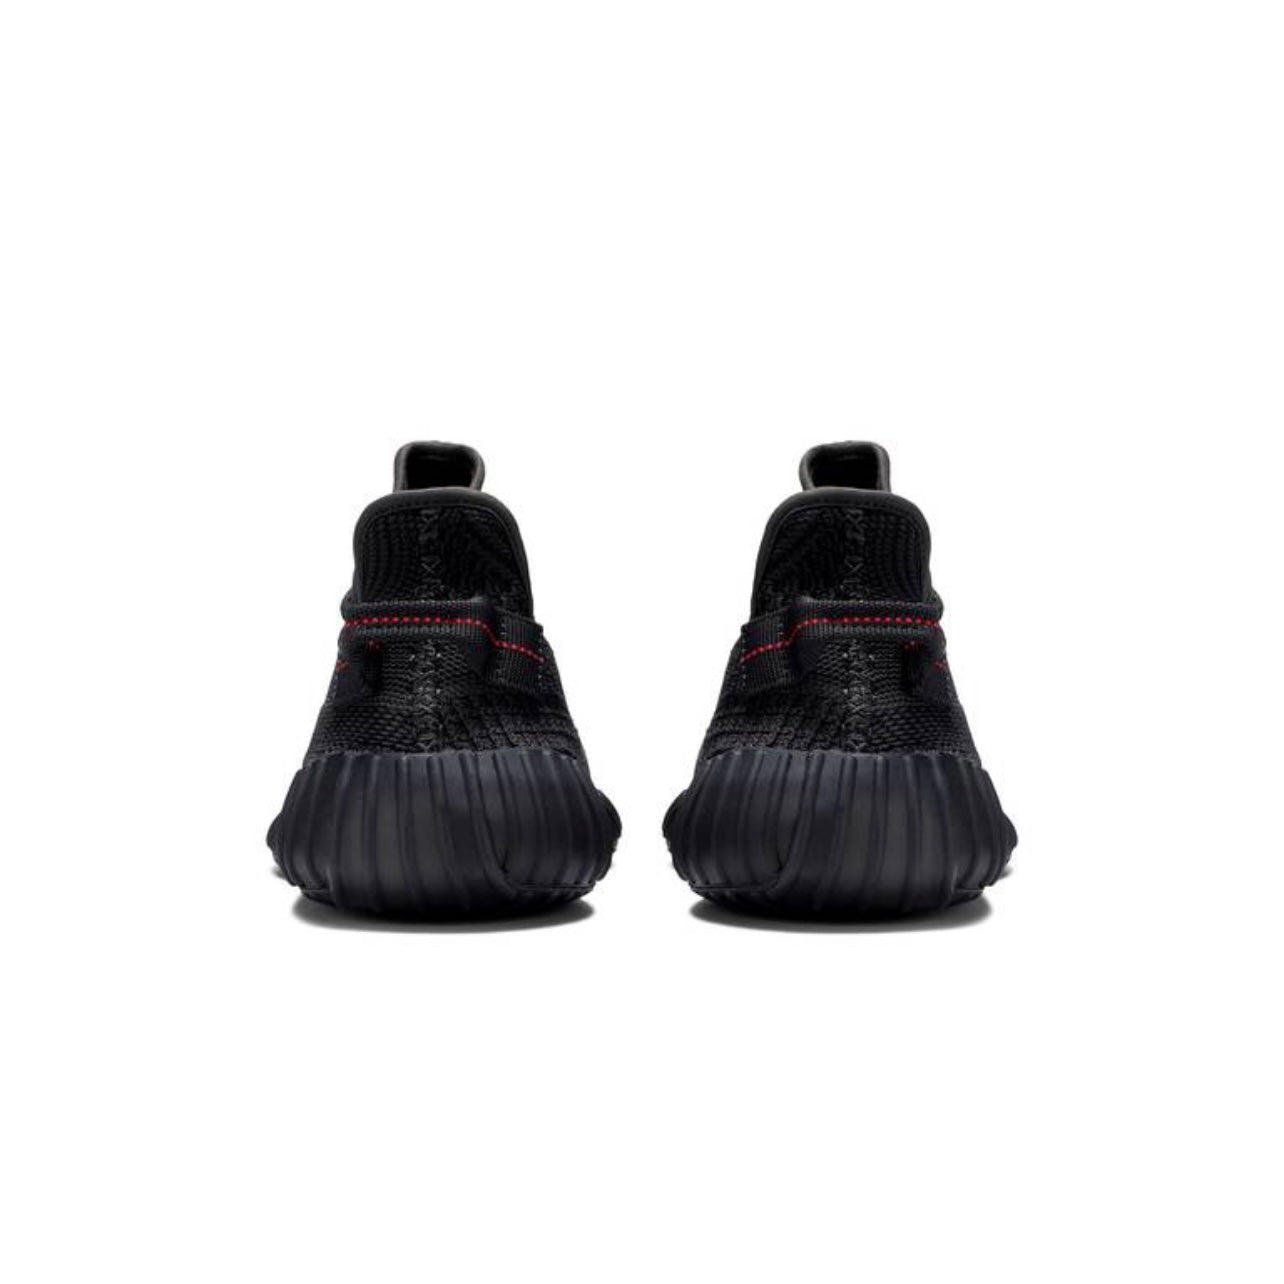 Adidas Yeezy 350 Boost V2 "Black Non Reflective"